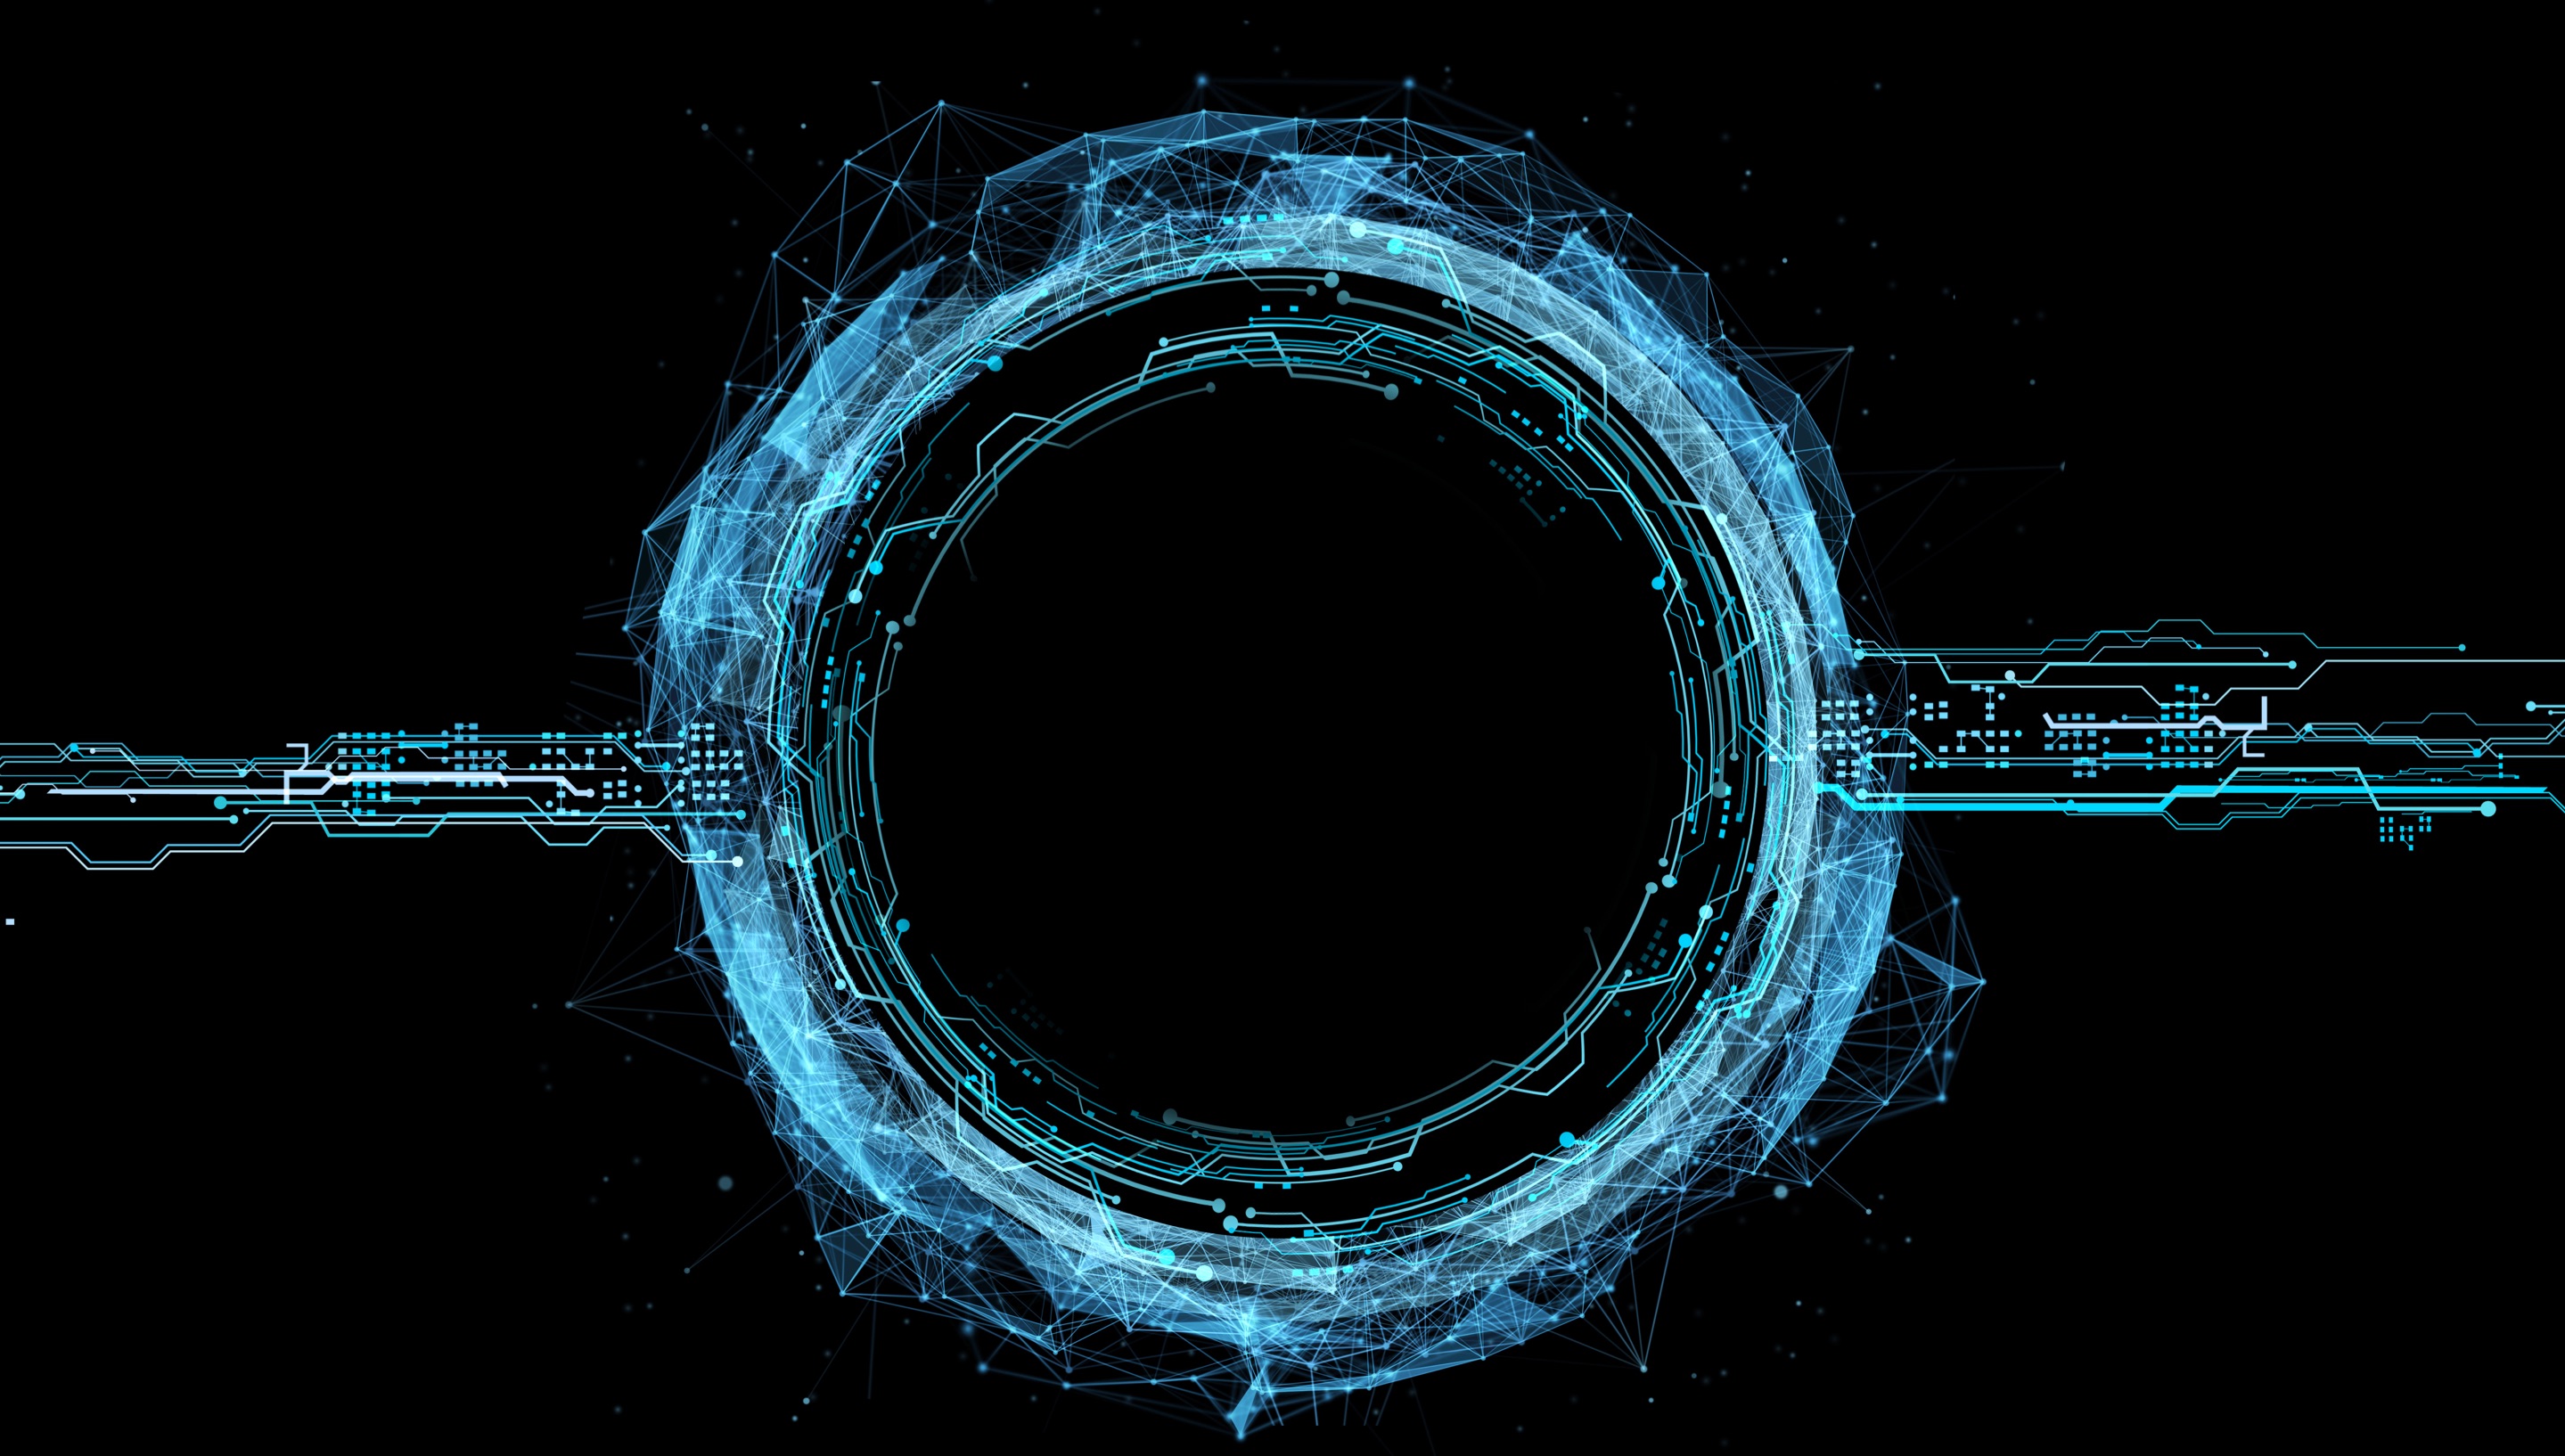 abstract circular image representing technology and engineering